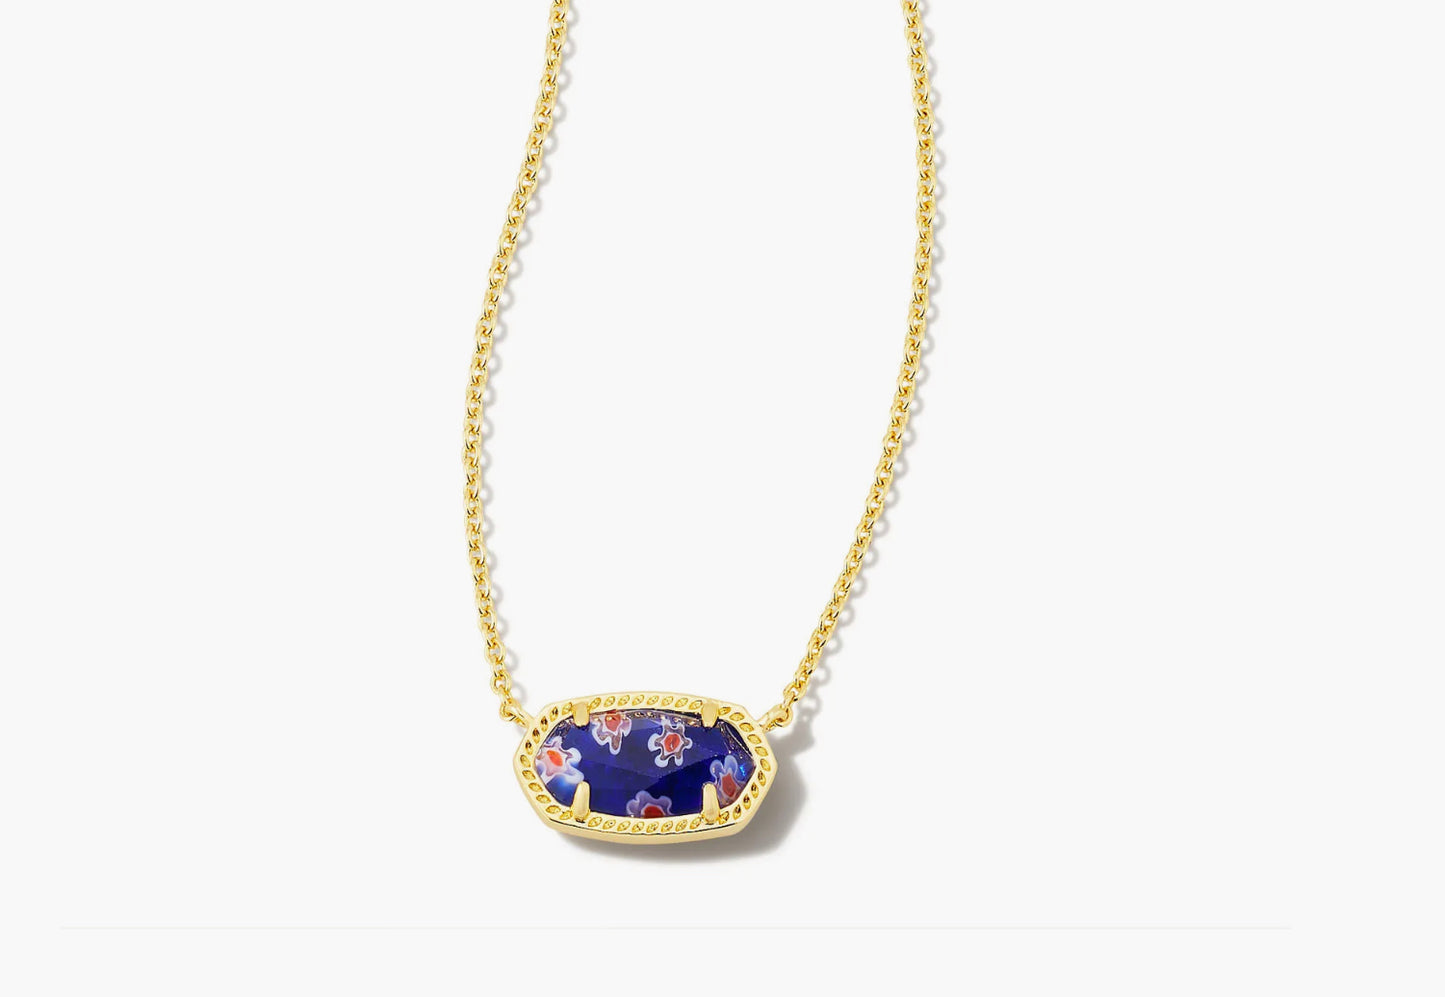 Kendra Scott Elisa Pendant Necklace / Gold Cobalt Blue Mosaic Glass